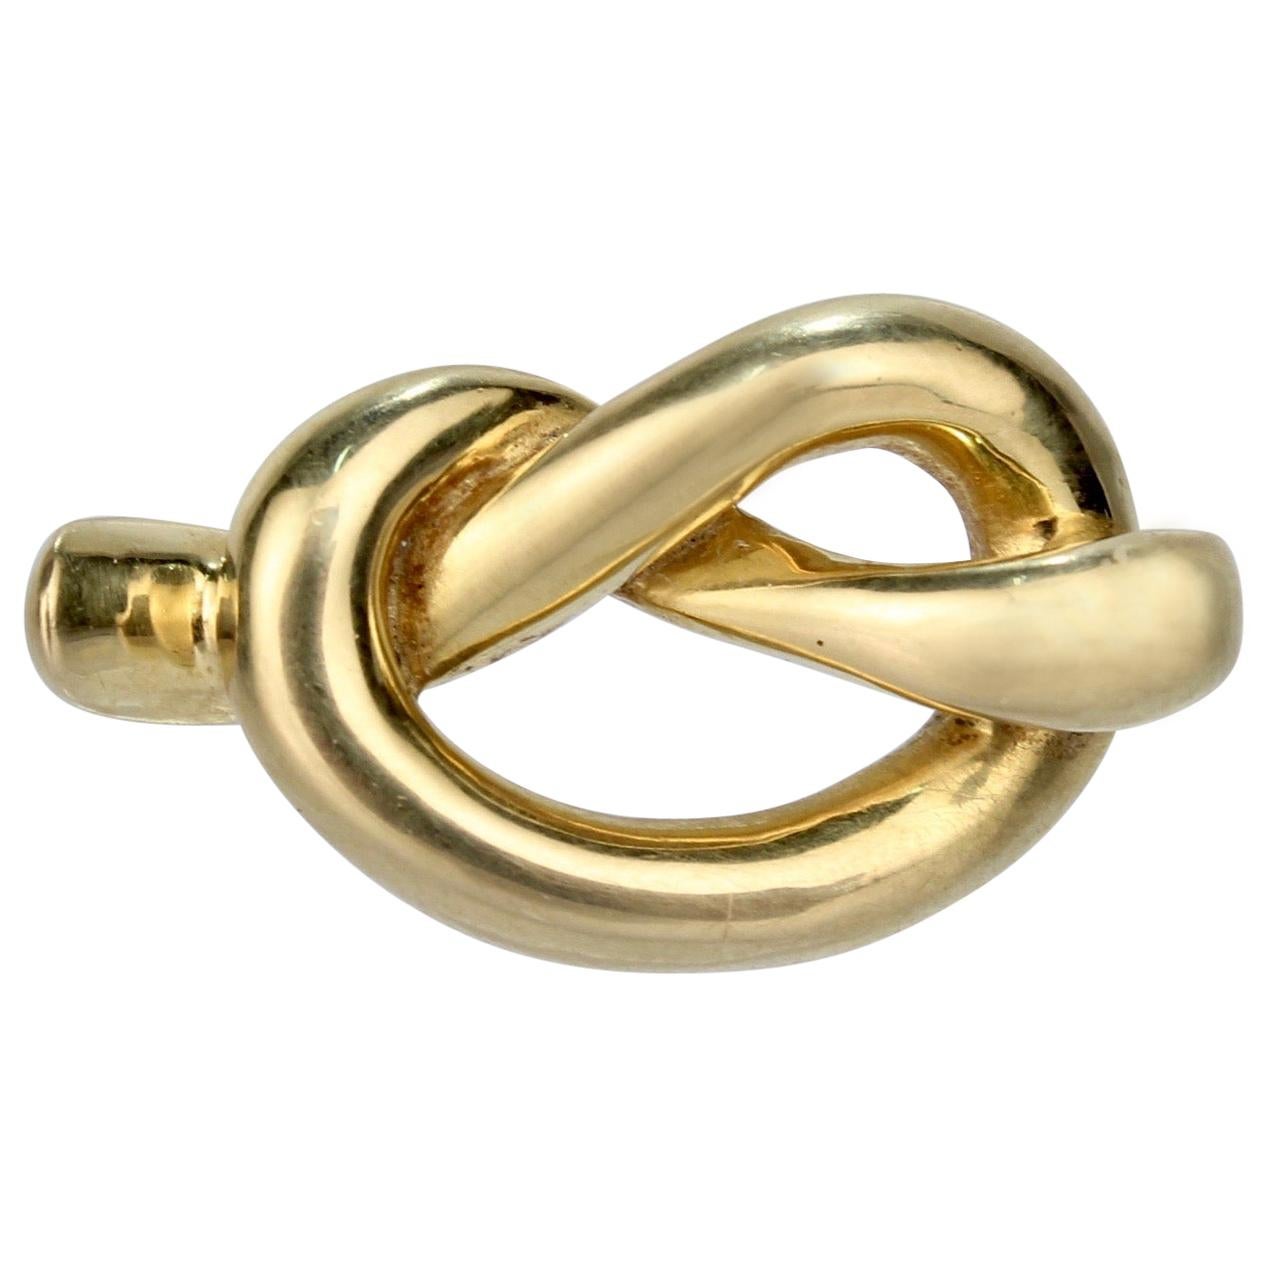 Tiffany & Co. 18 Karat Gold Pretzel Knot Pendant for a Necklace or Charm, 1979